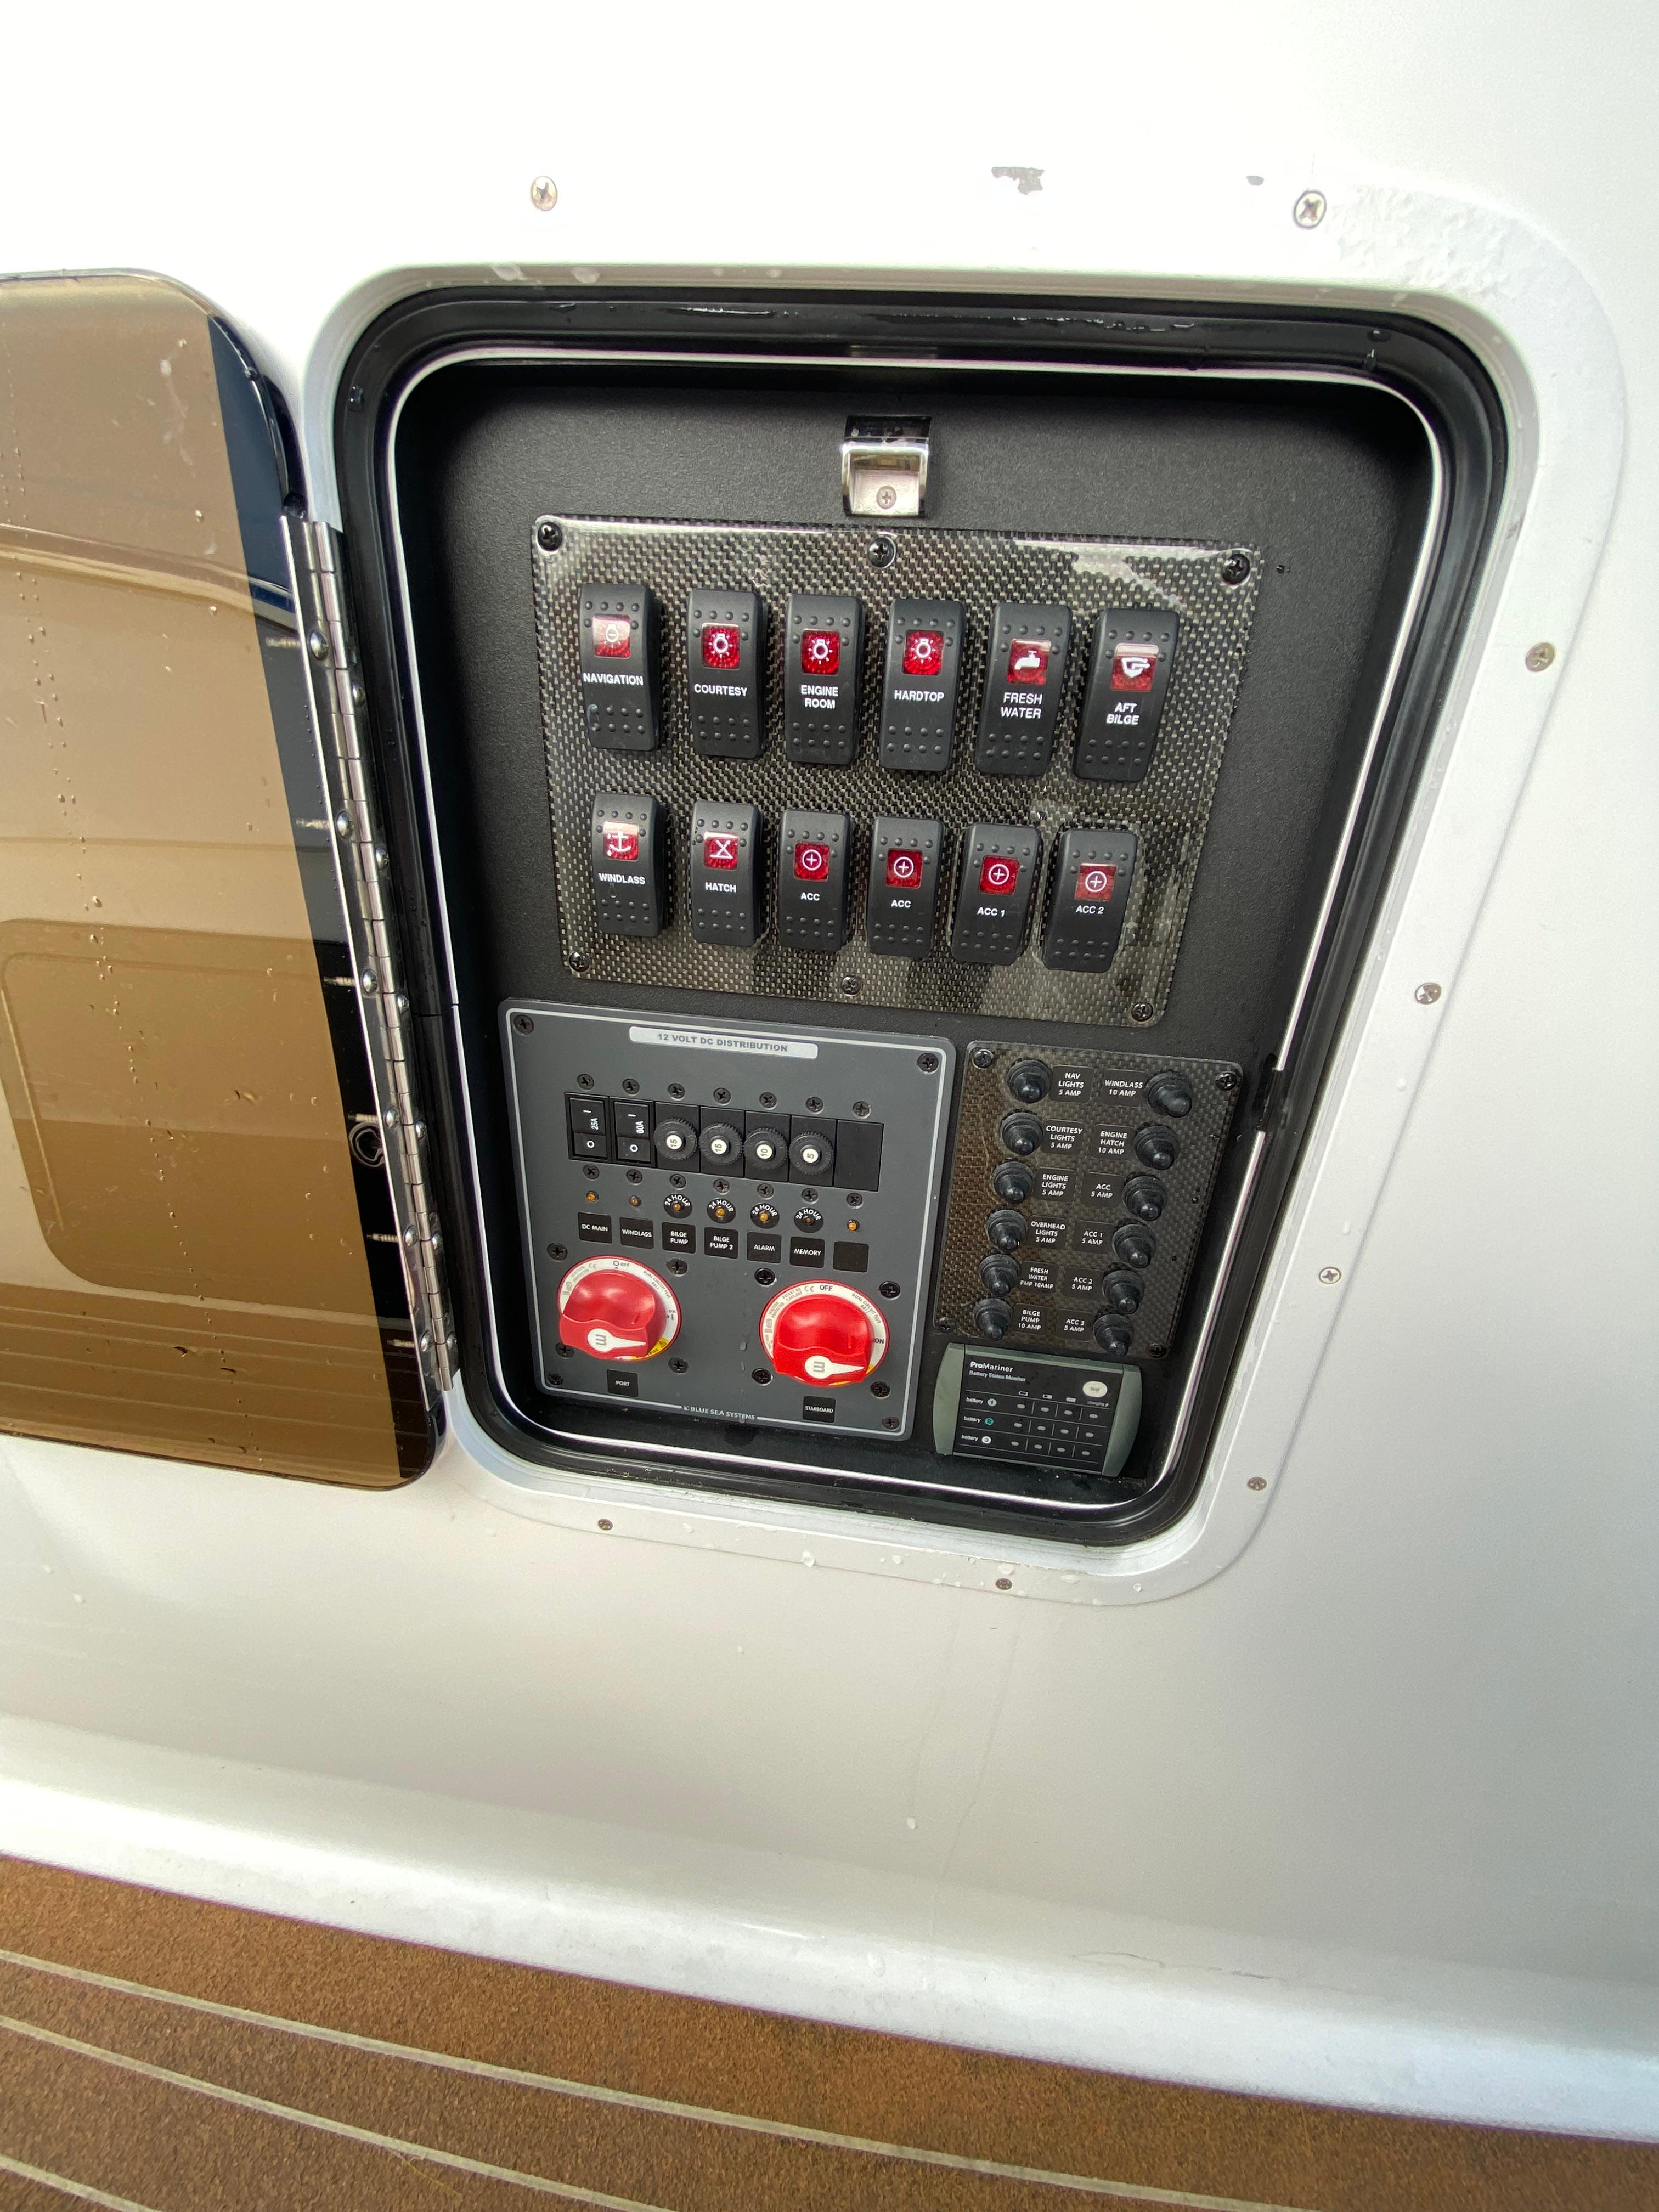 Switch Panel